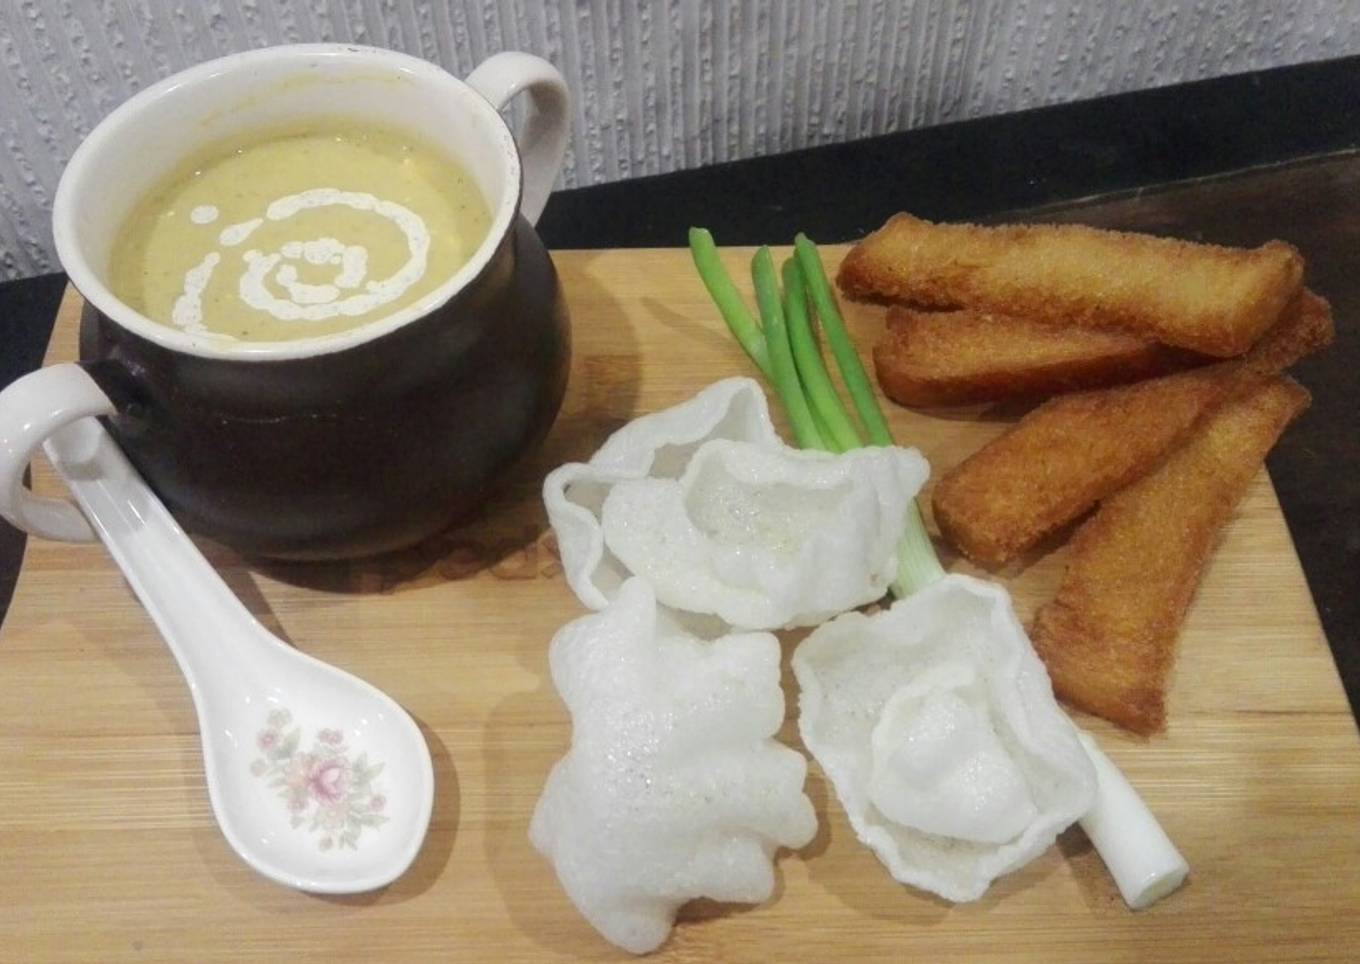 Malligawtani soup with fried garlic bread